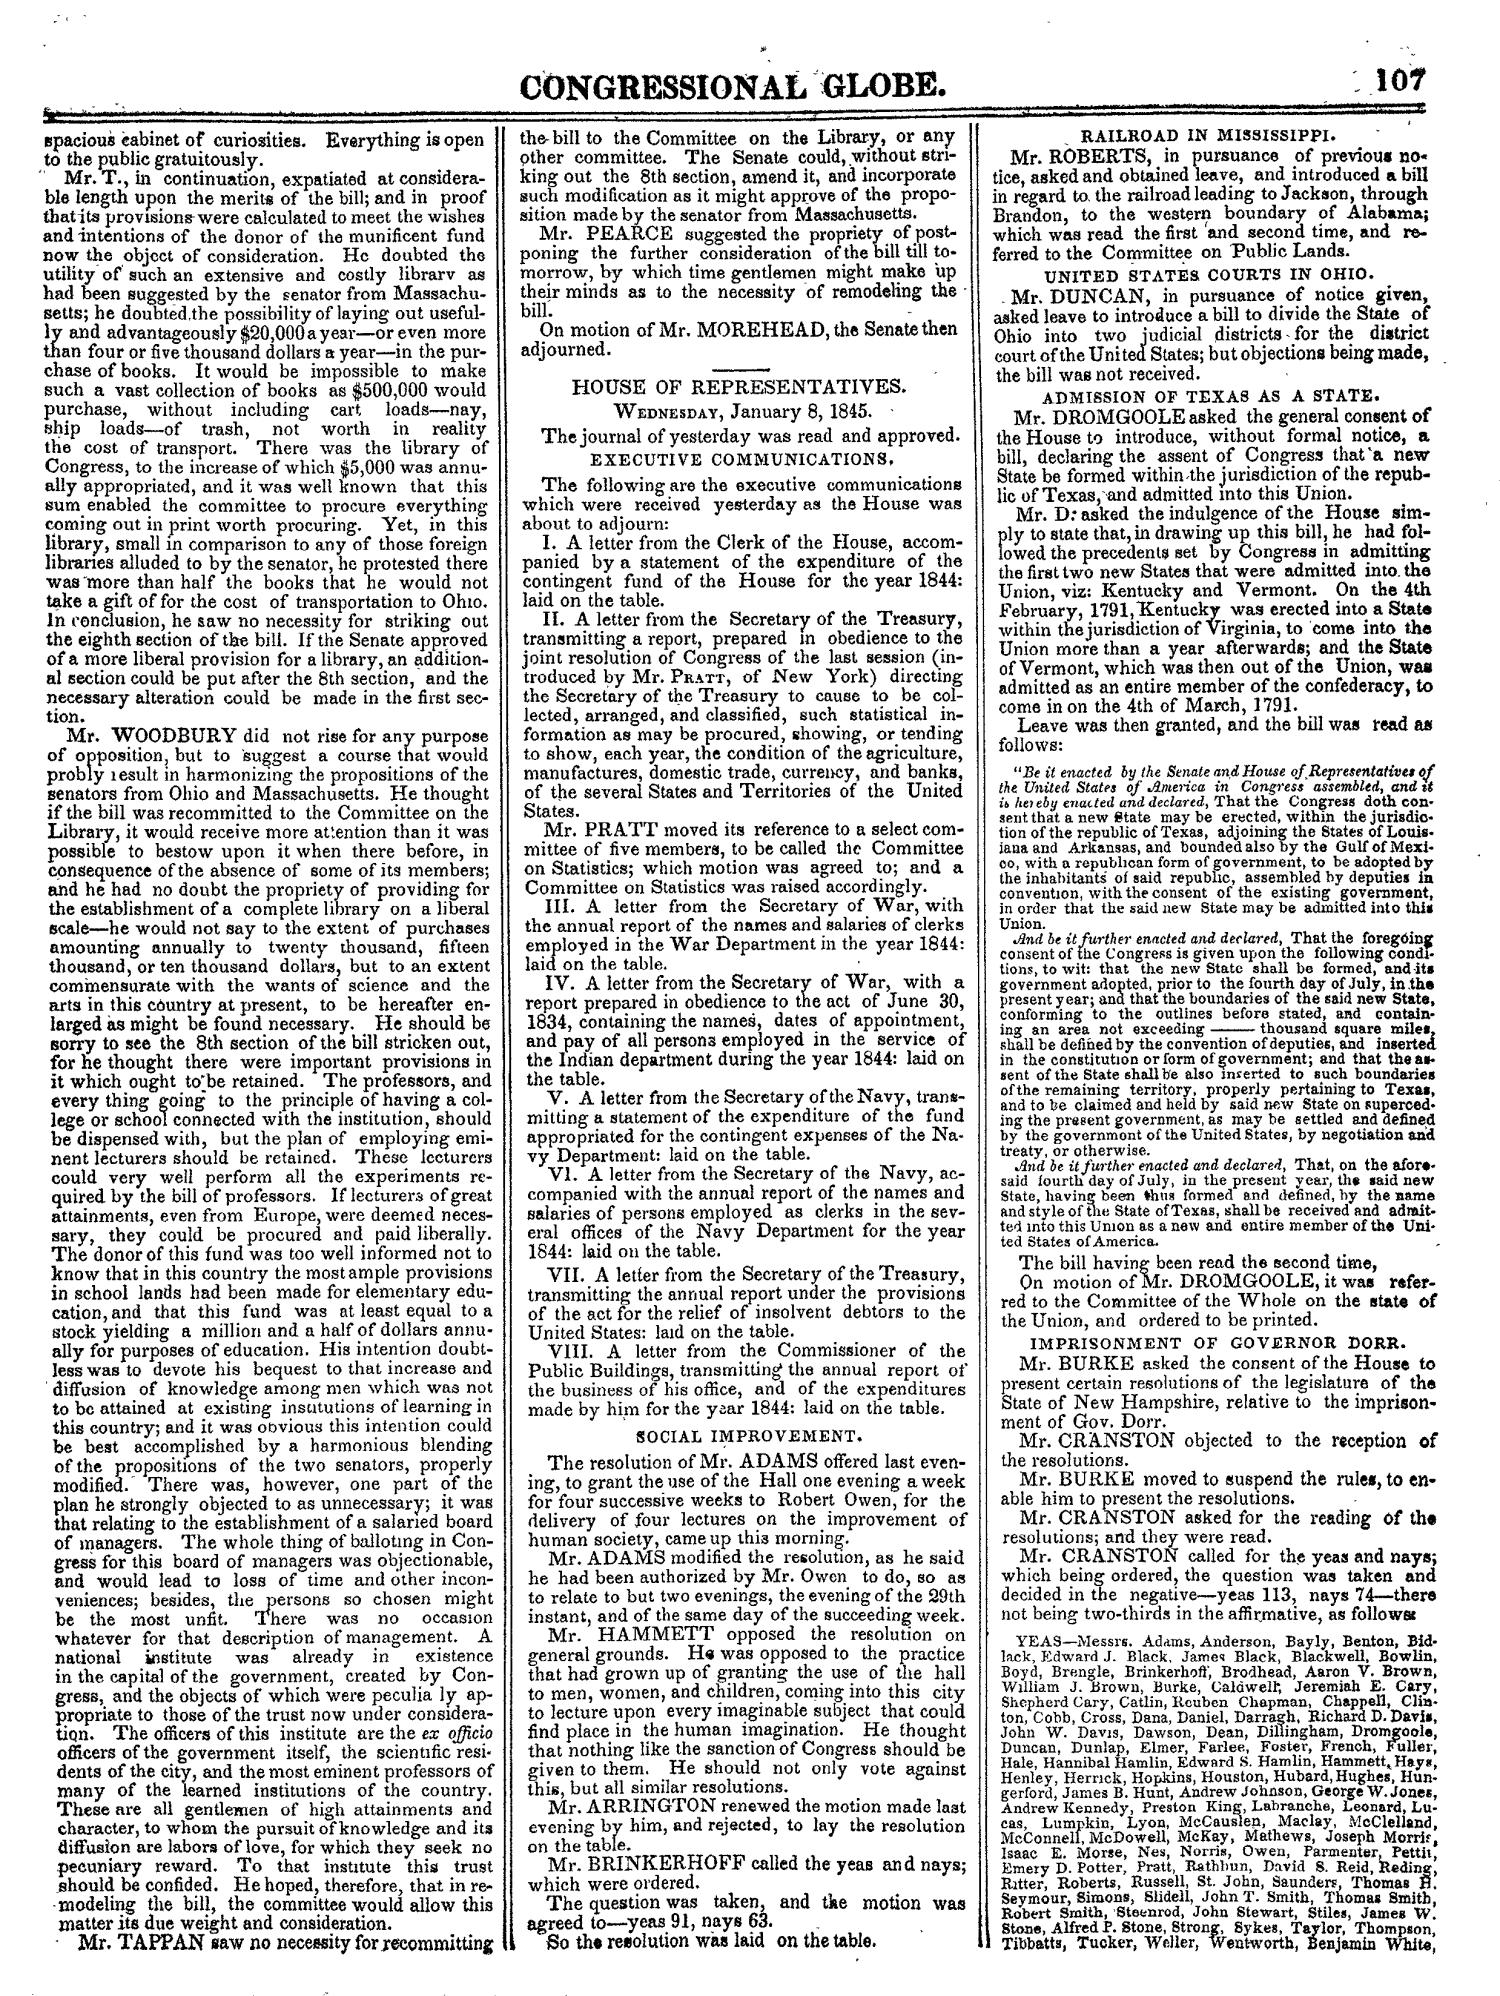 The Congressional Globe, Volume 14: Twenty-Eighth Congress, Second Session
                                                
                                                    107
                                                